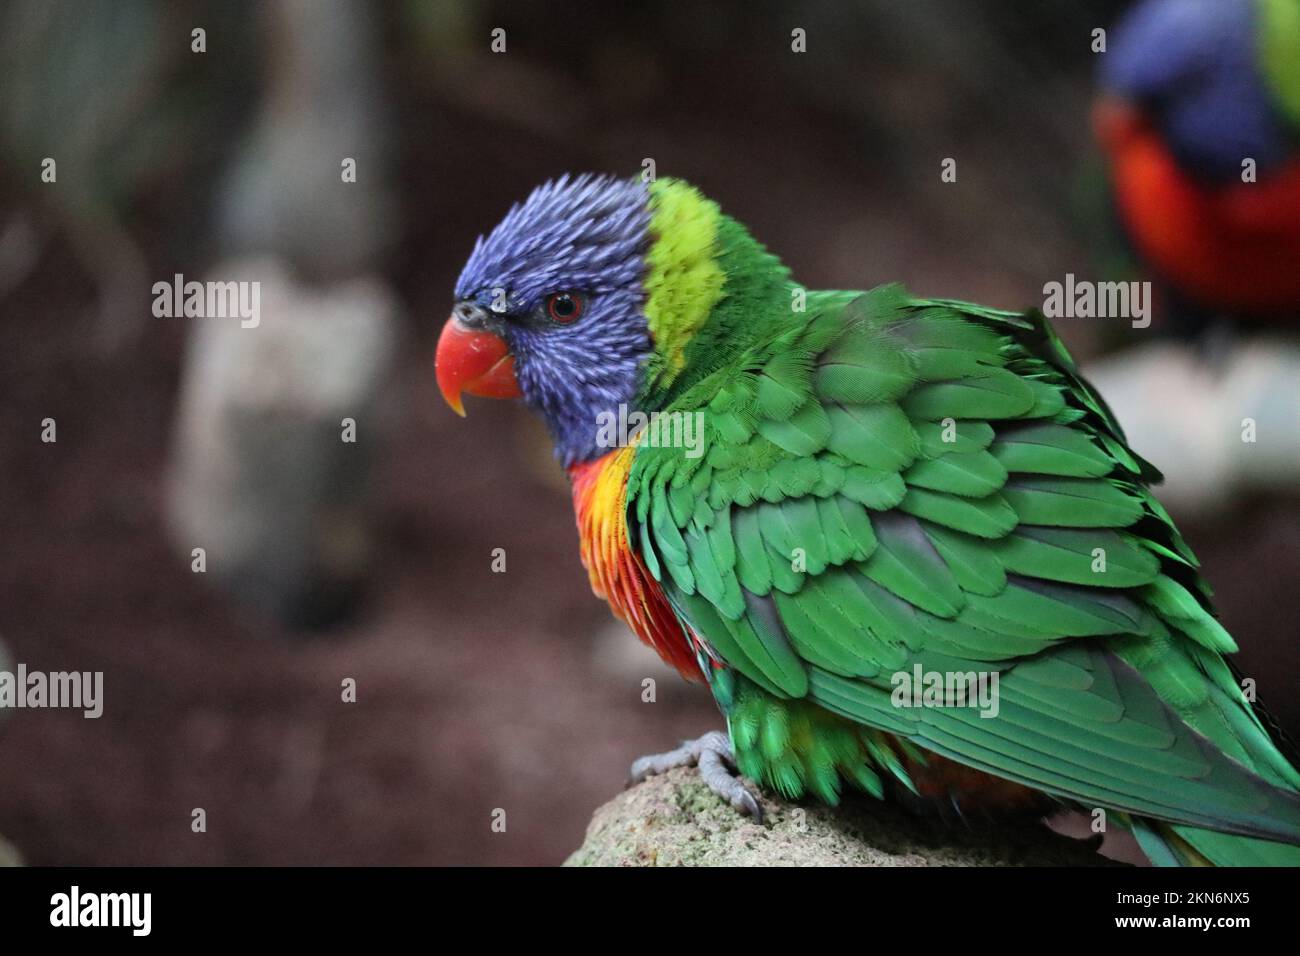 A closeup of a rainbow colored Loriini parrot Stock Photo